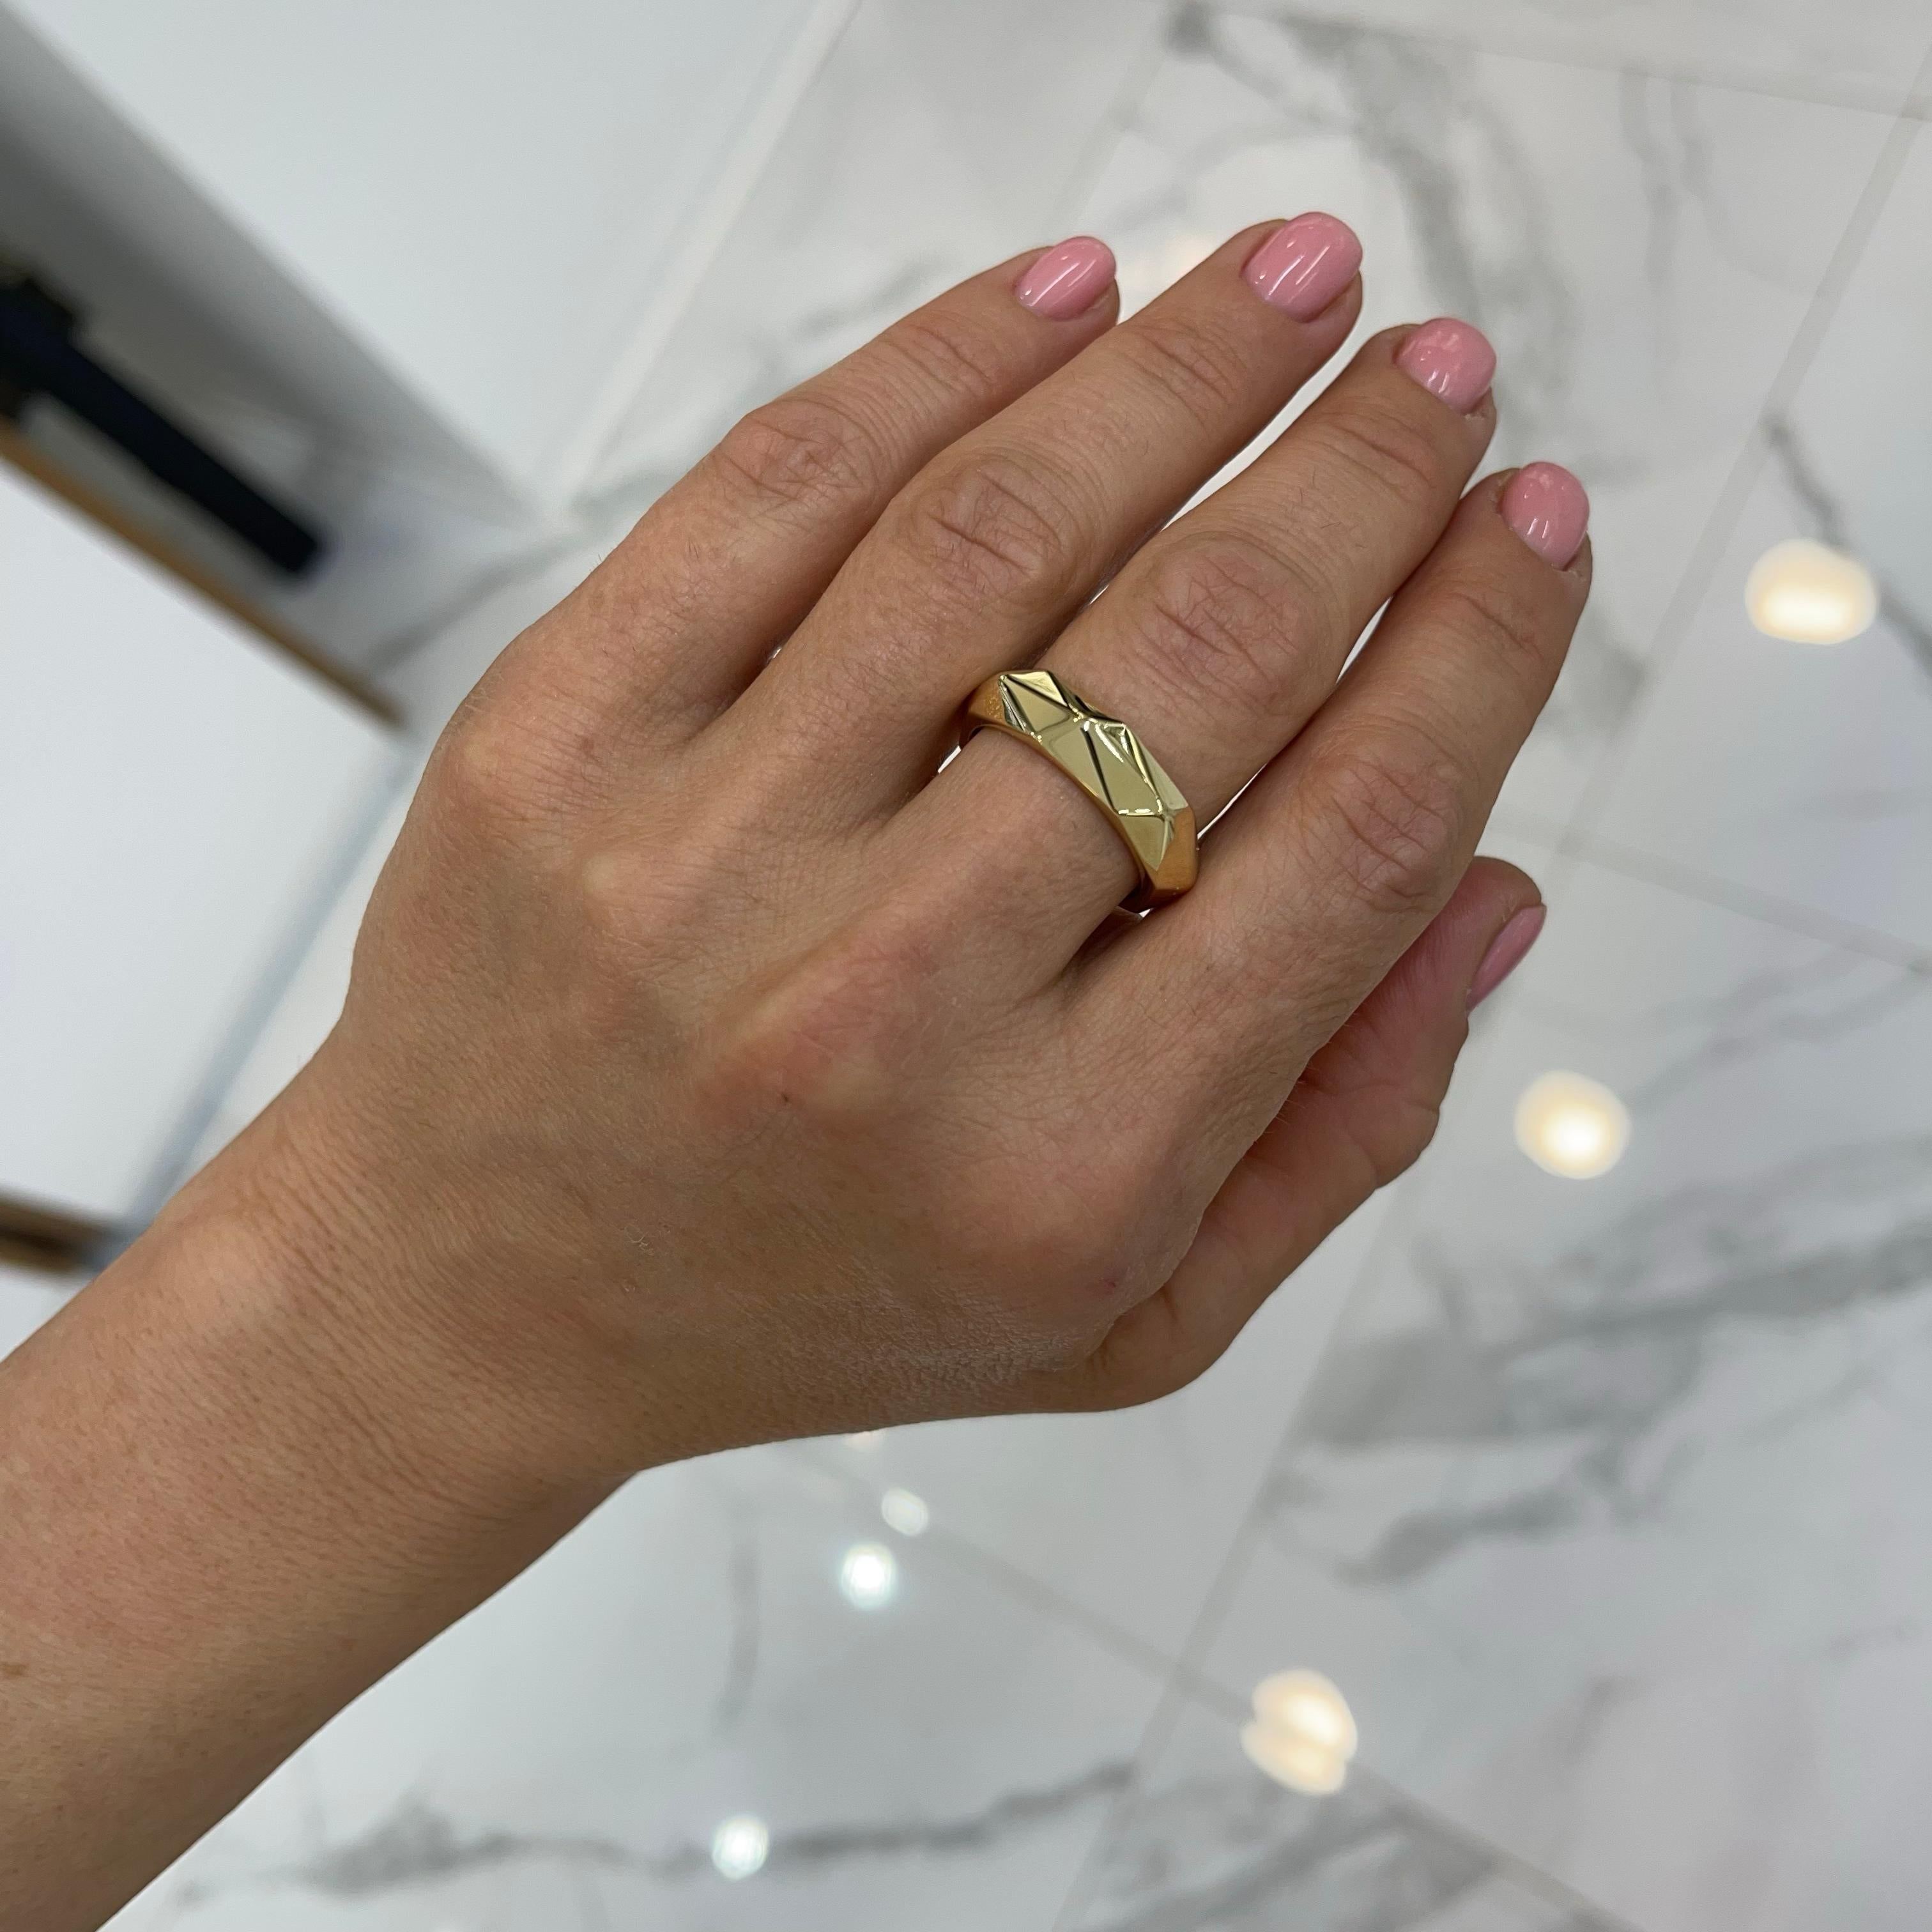 david yurman wedding rings for her